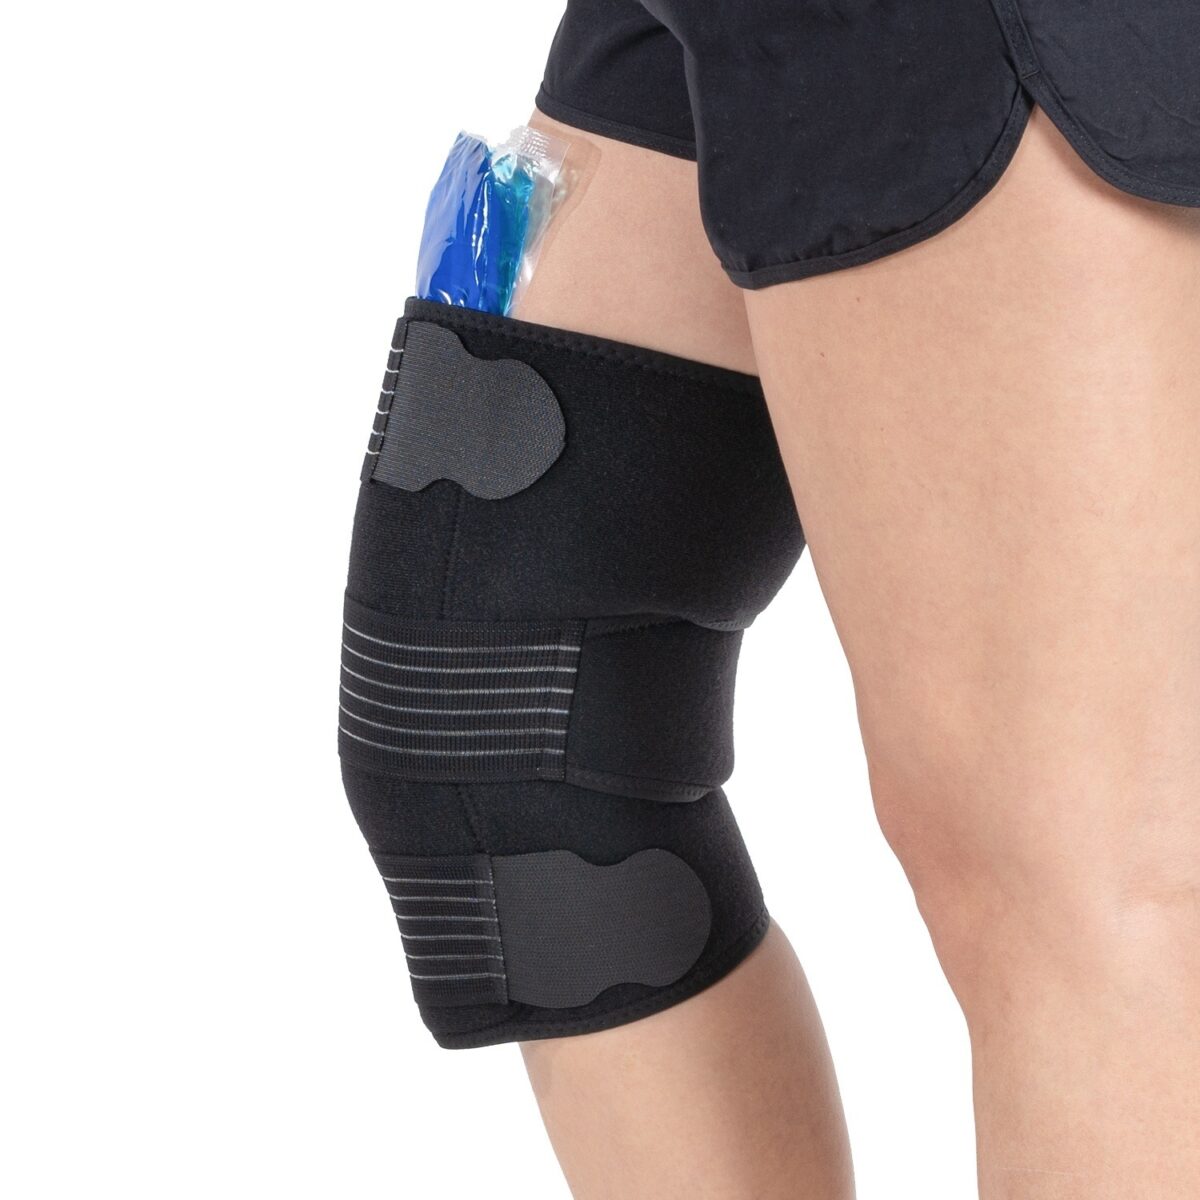 wingmed orthopedic equipments W511 knee support post arthroscopy 28